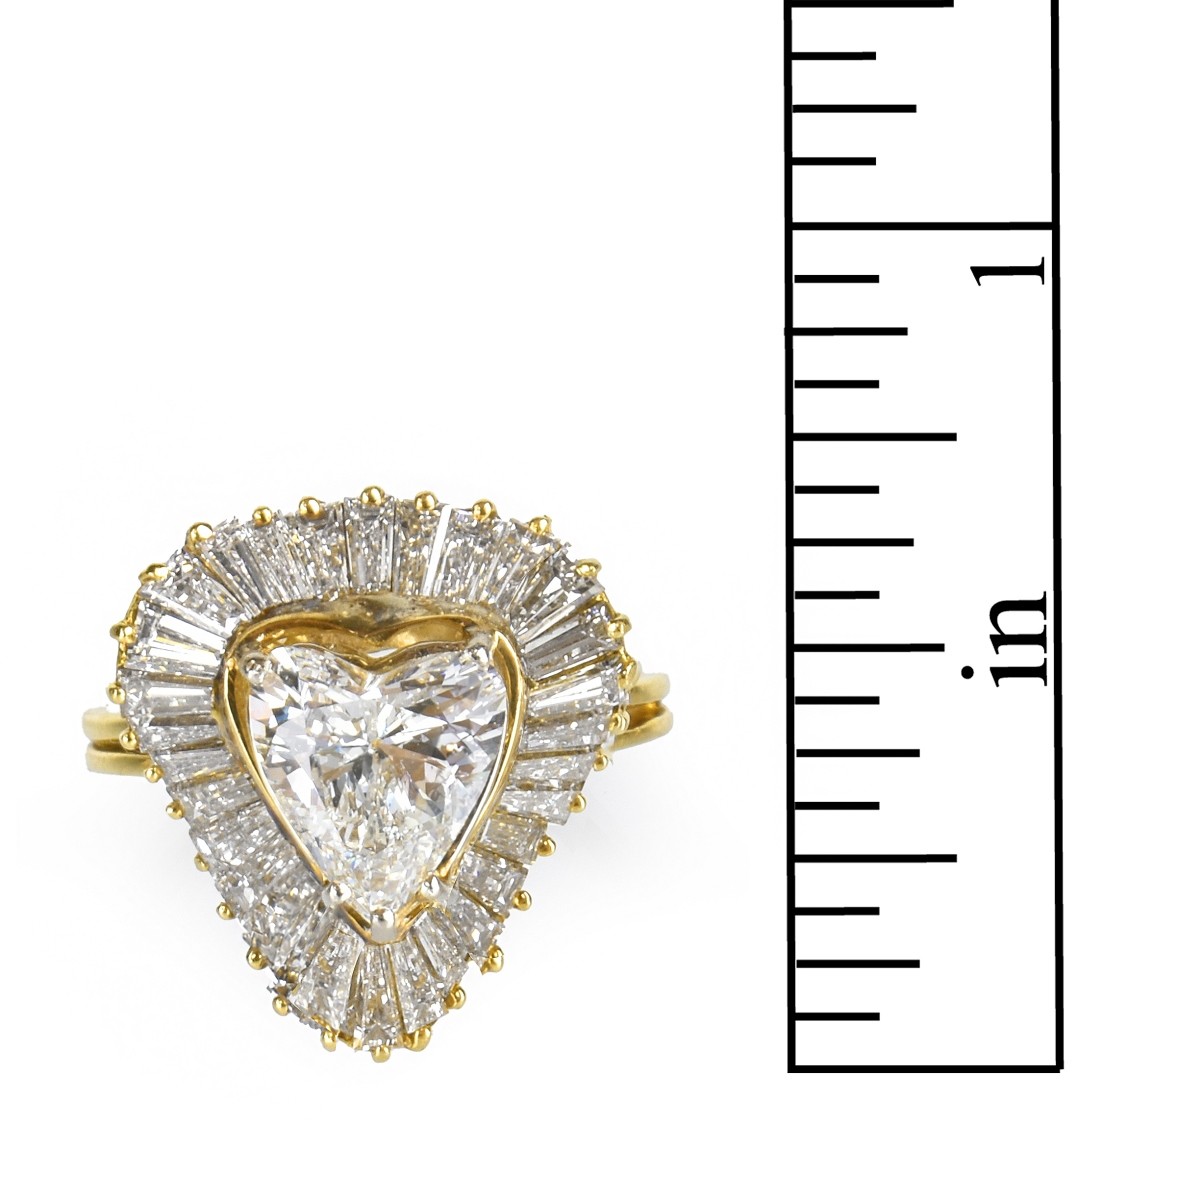 3.78 Carat Diamond and 18K Ring